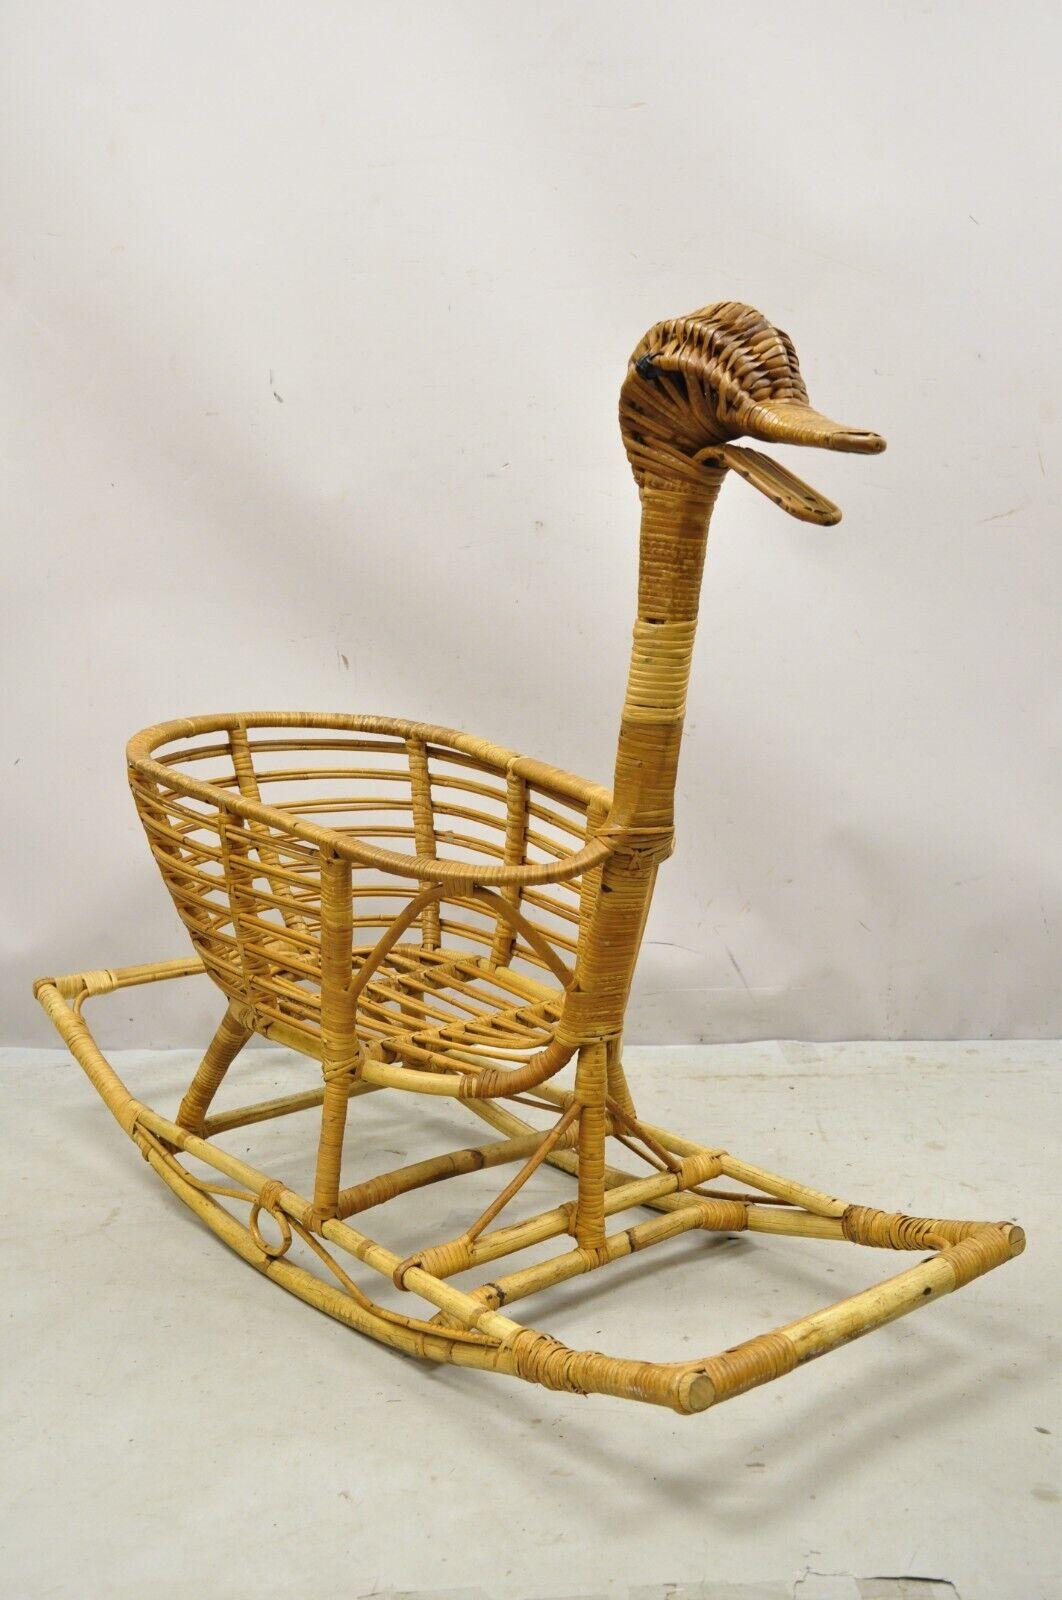 Vintage Mid-Century Modern Wicker Rattan Figural Duck Rocker Bassinet Basket Crib Plant Holder. Circa Mid-20th century. Measurements: 35